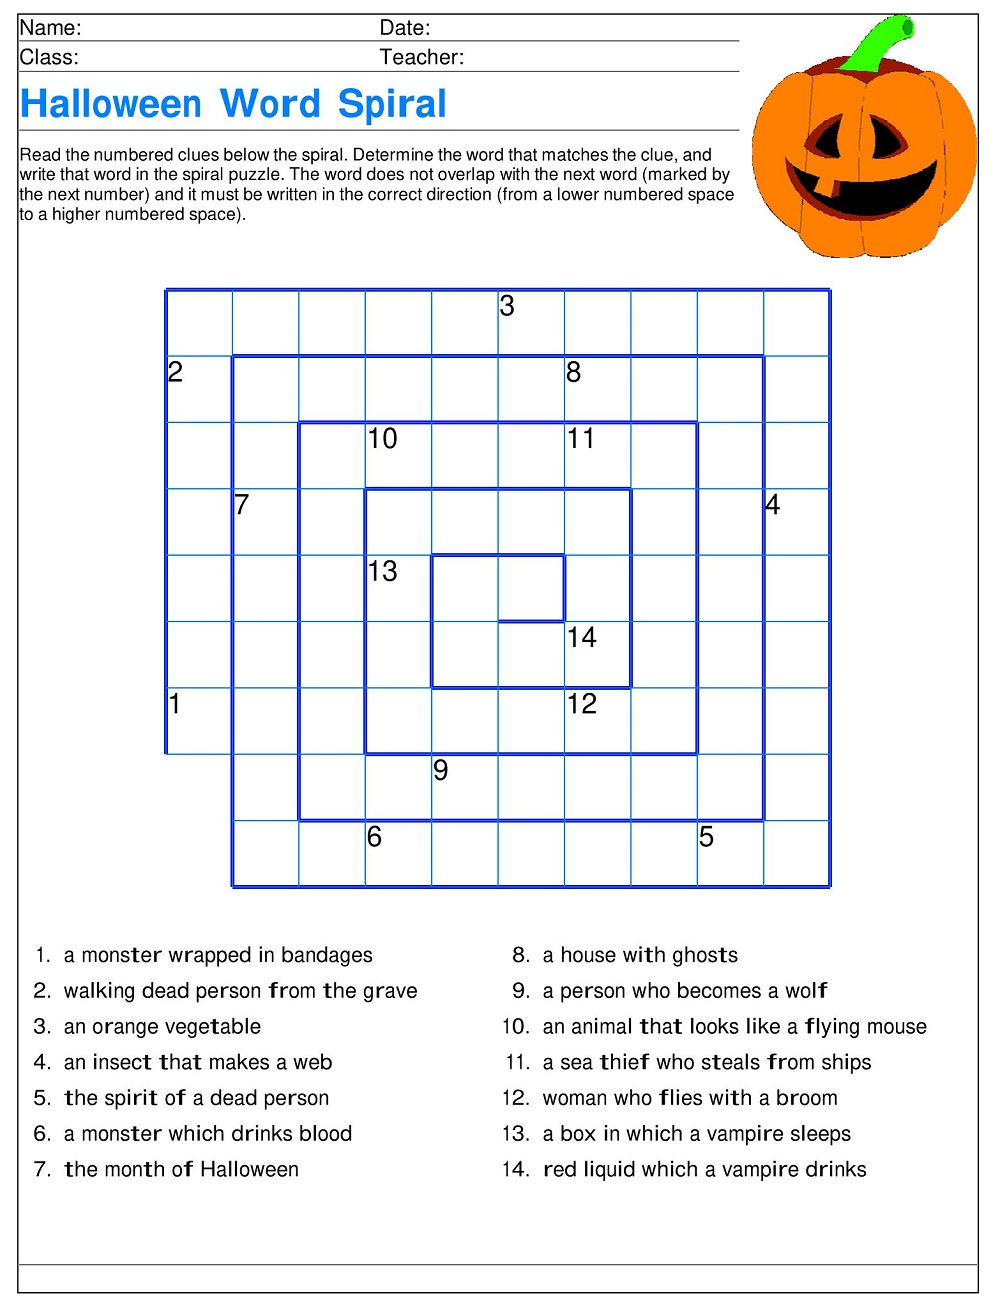 Halloween Word Spiral Puzzle